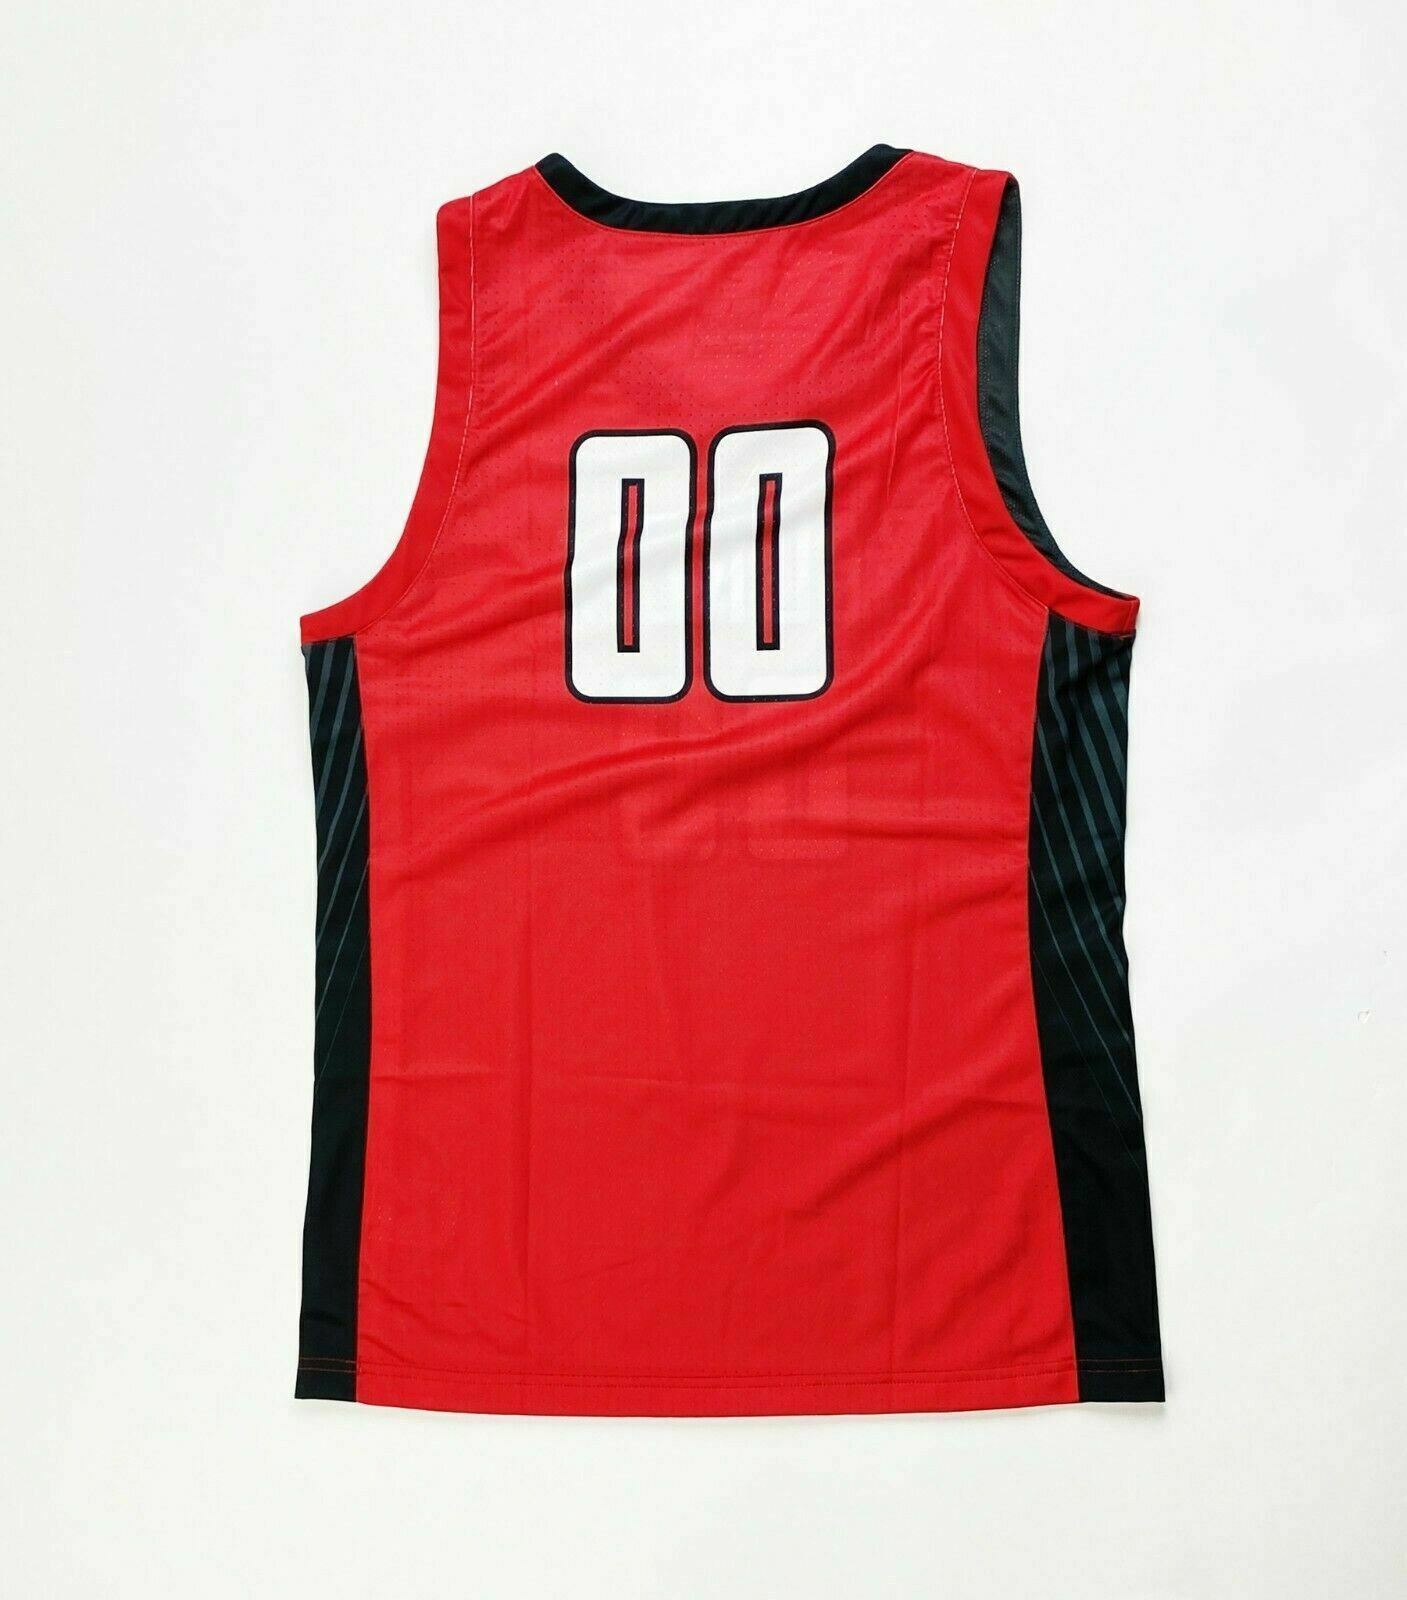 Nike team usa basketball olympics Devin Booker Jersey size 3XL